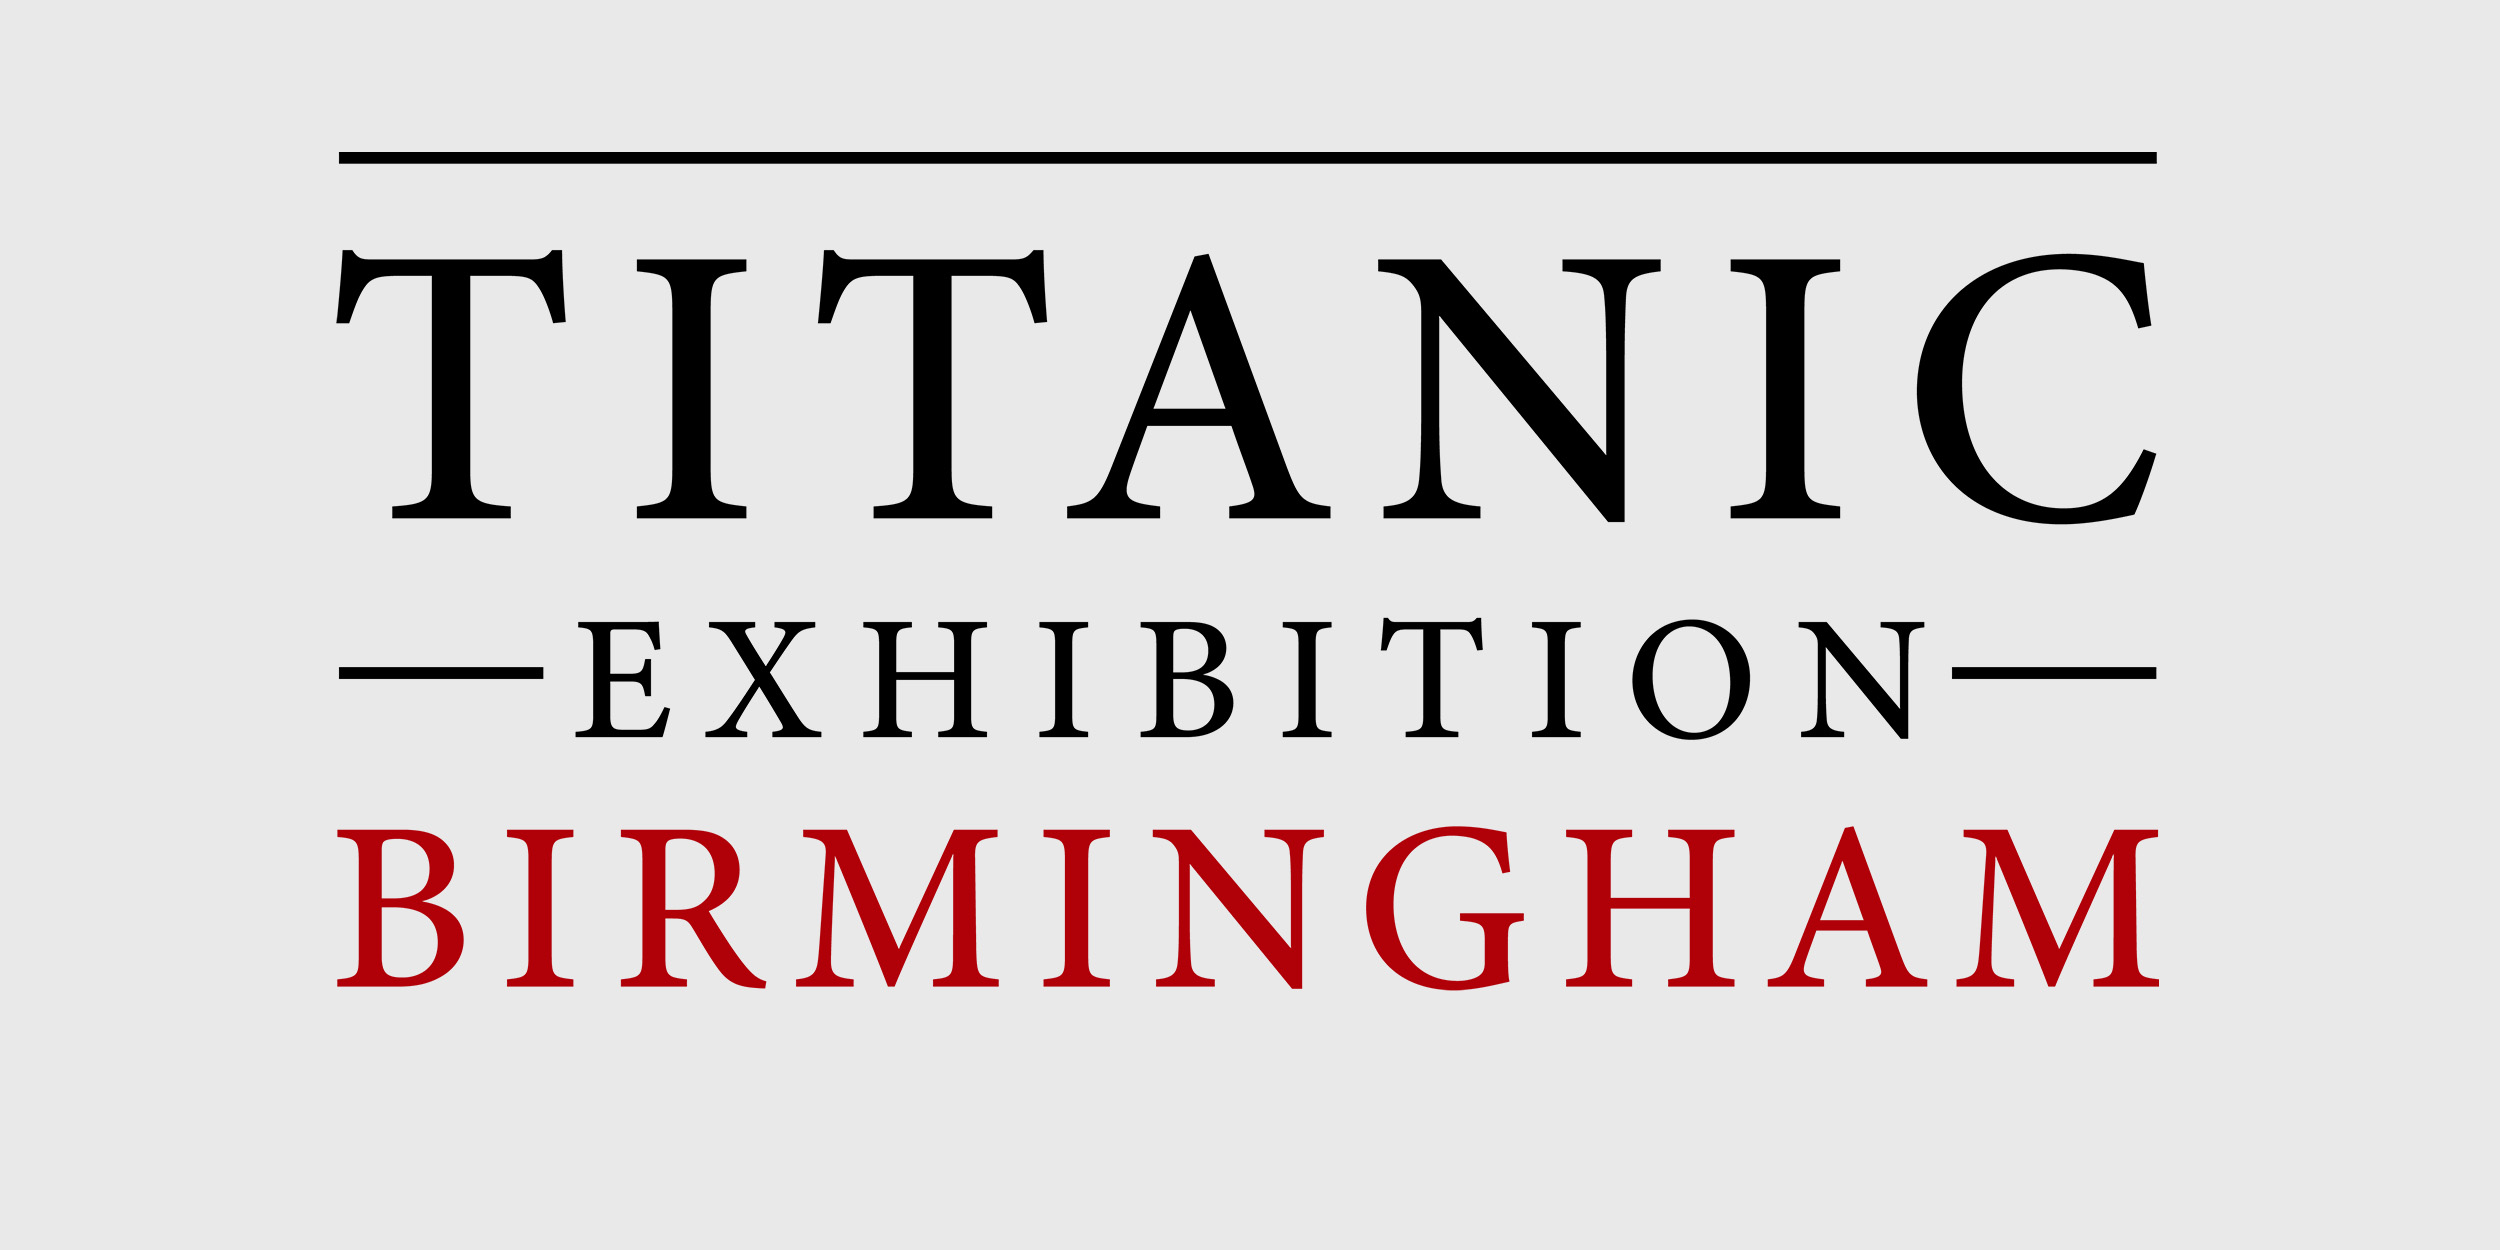 Titanic Exhibition Birmingham Logo - Titanic Exhibitions.jpg